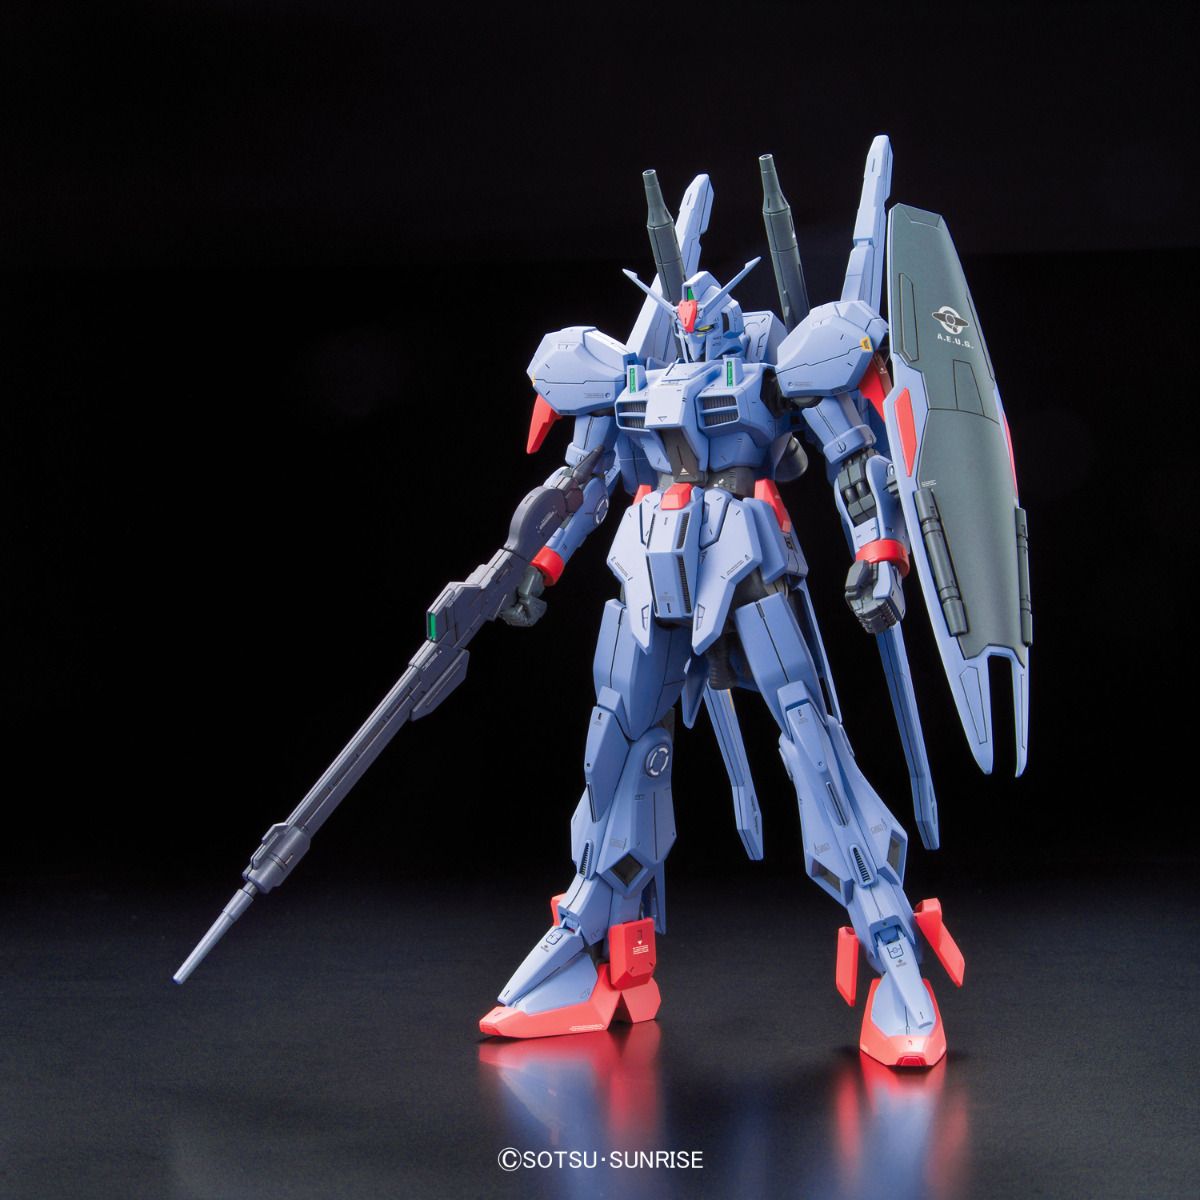 RE 1/100 MSF-007 Gundam Mk-III